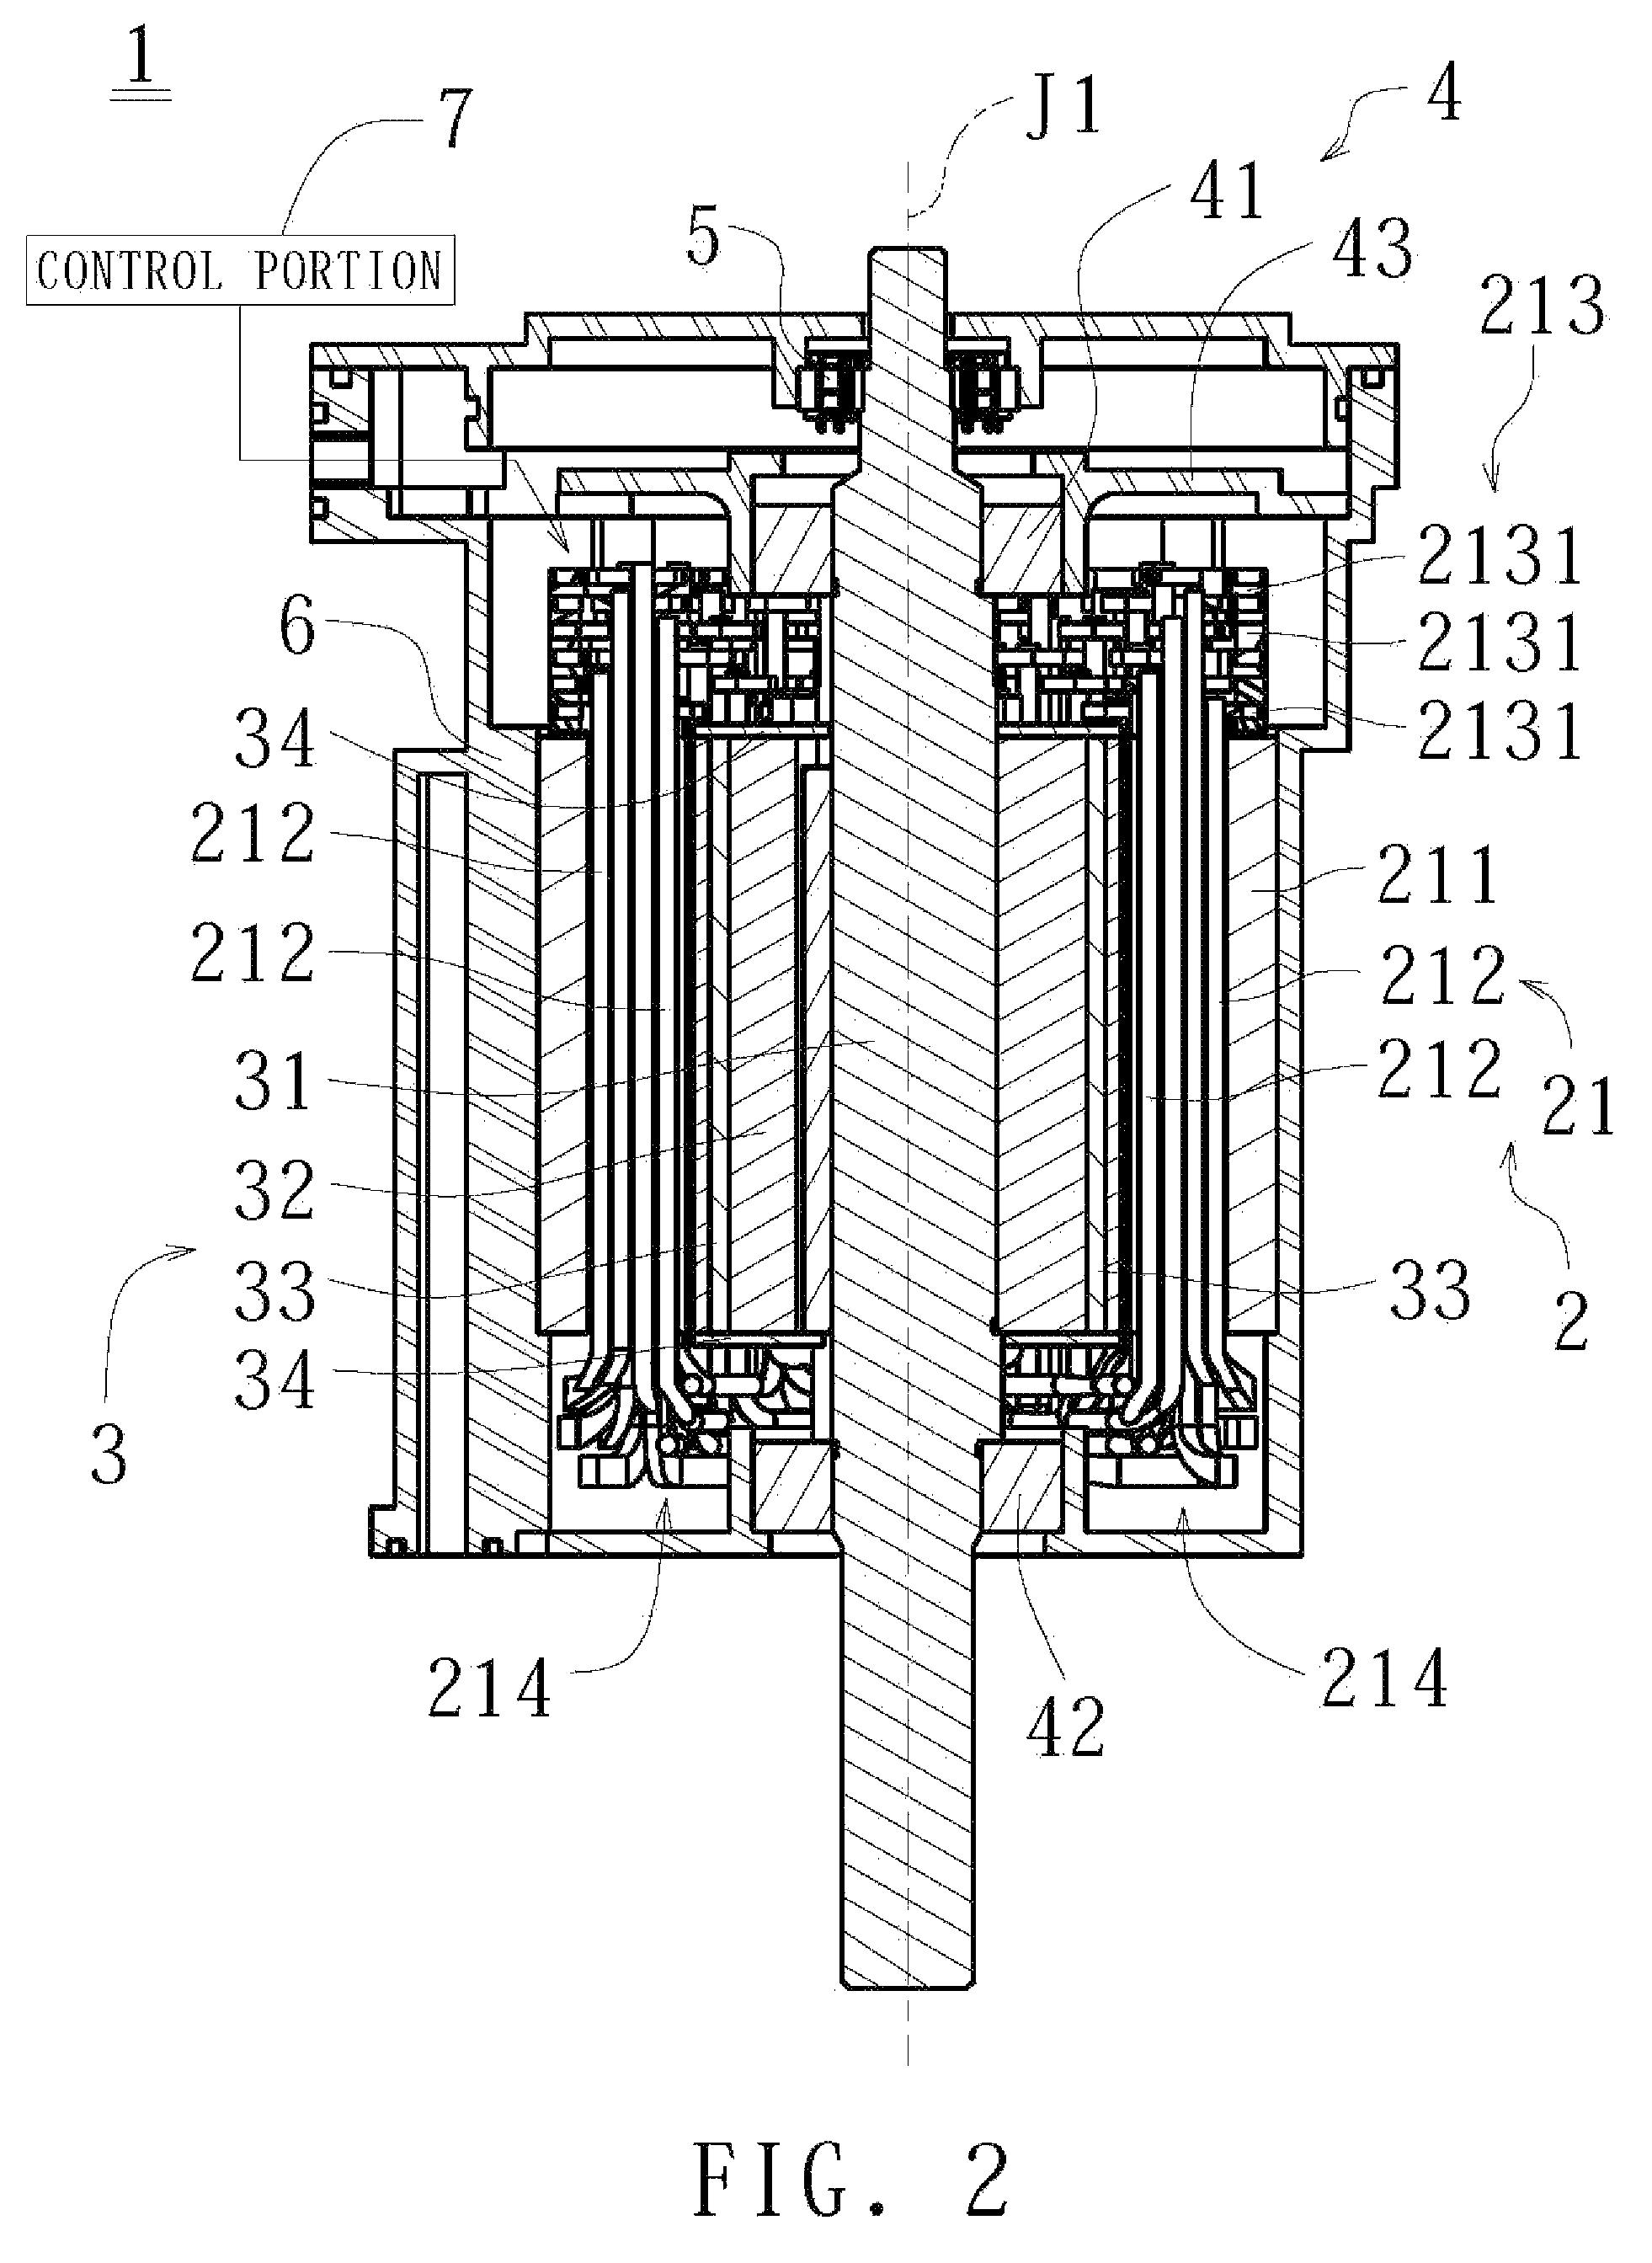 Interior permanent magnet motor